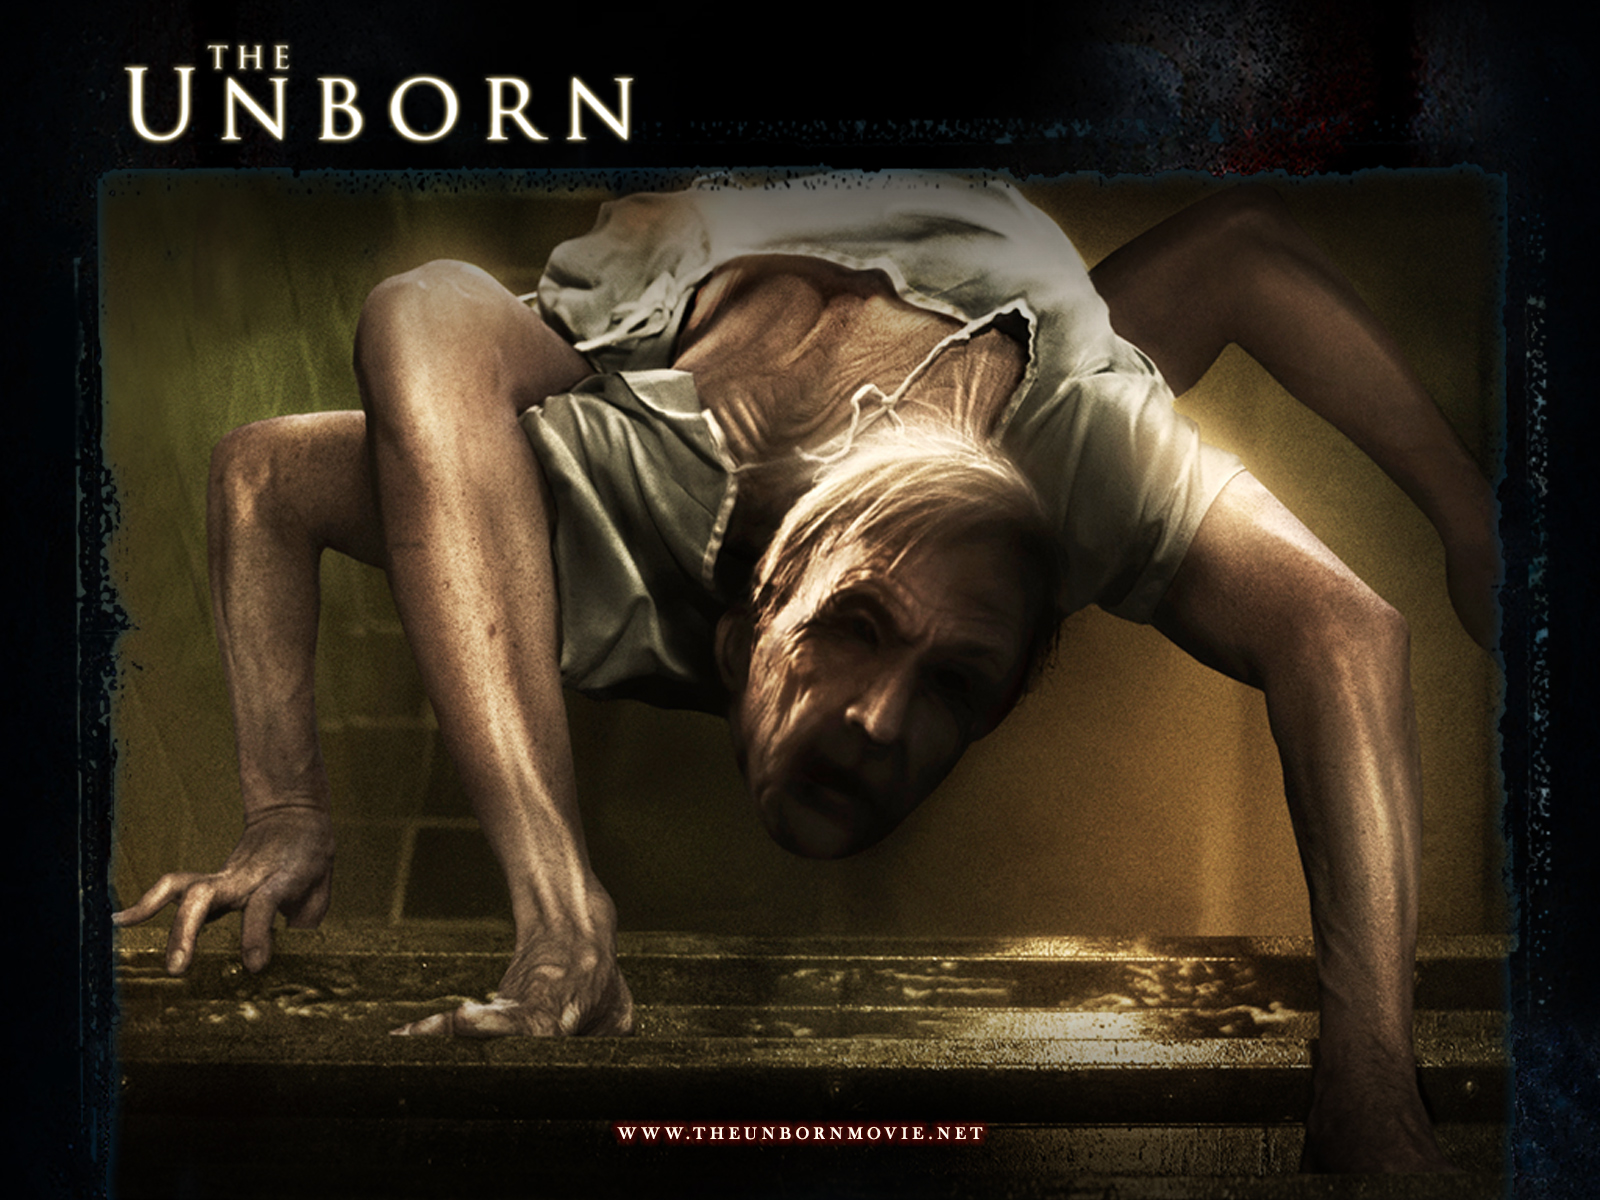 http://1.bp.blogspot.com/-qSbqmSayJrE/TVTib8_kREI/AAAAAAAAAOk/uIgmMLi7-HI/s1600/the-unborn-horror-wallpaper.jpg